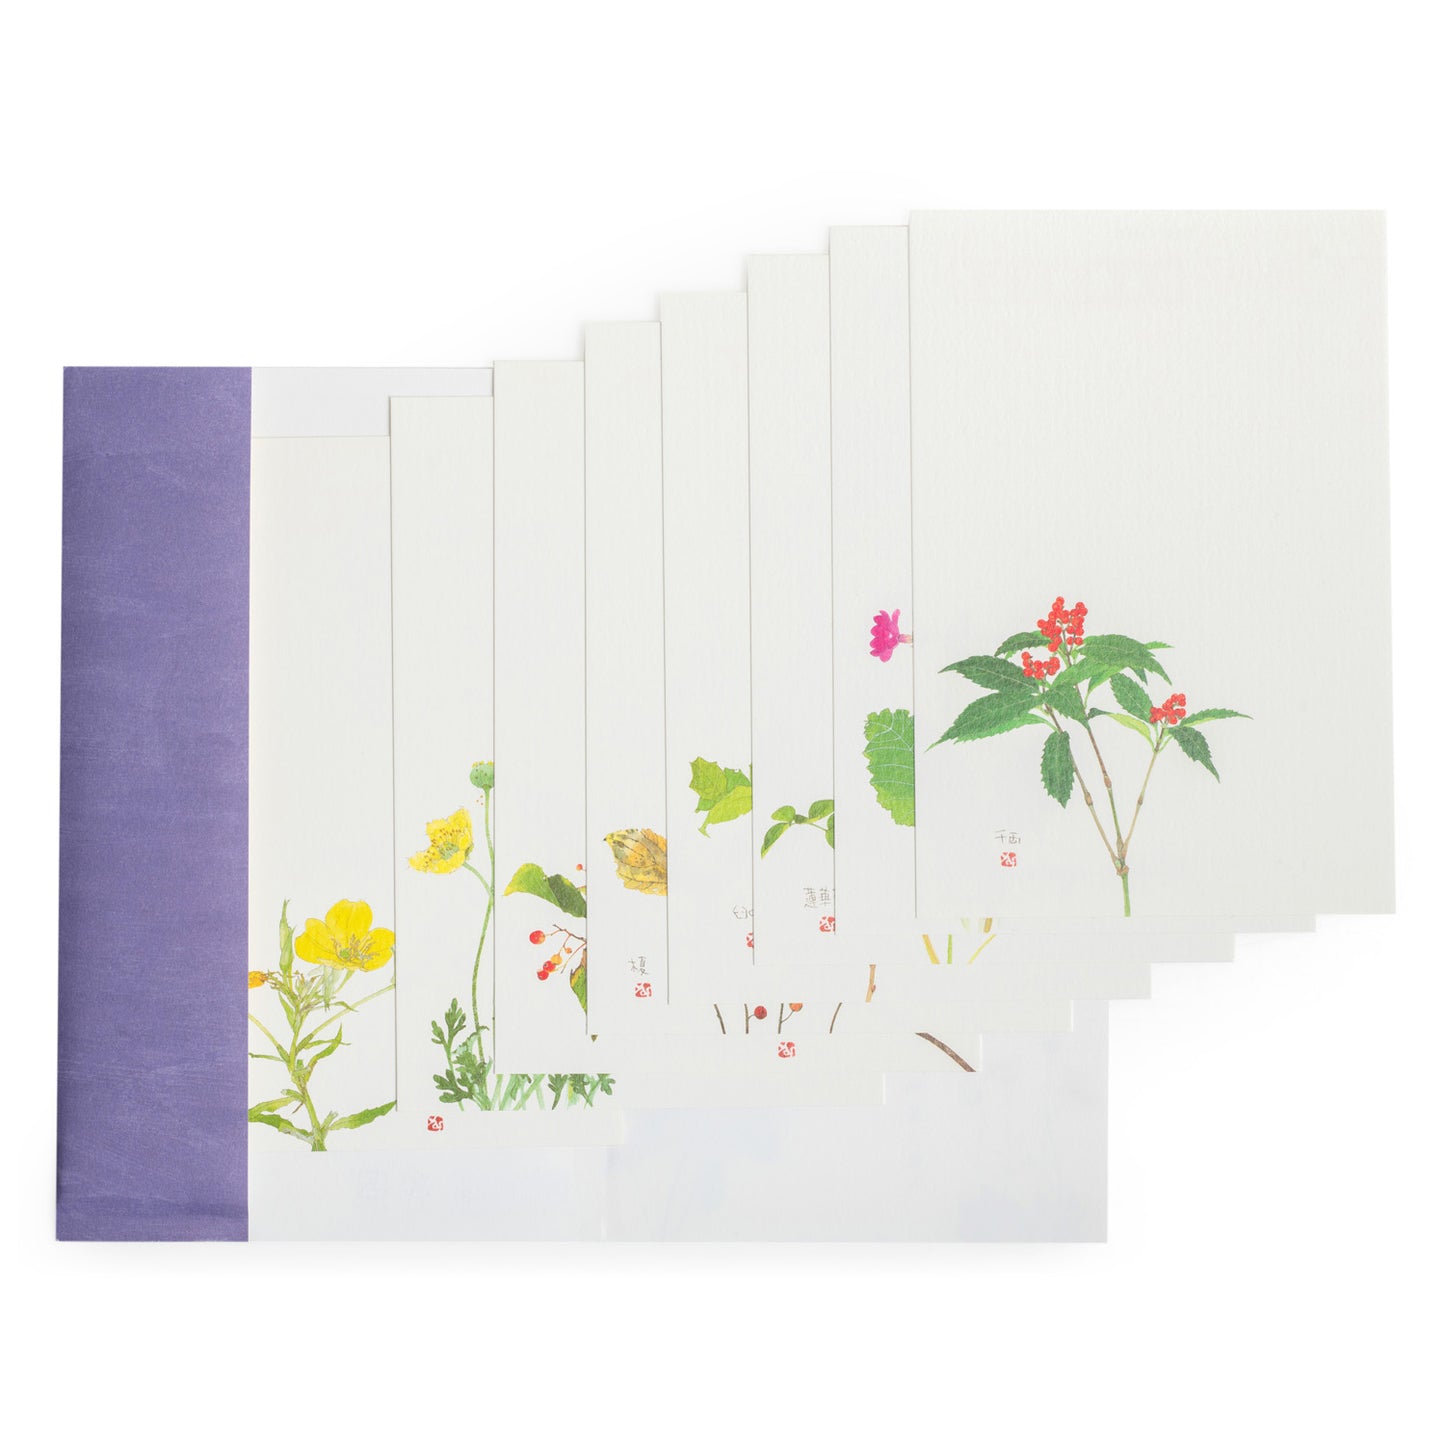 Four Seasons Pack of 8 Japanese Postcards range